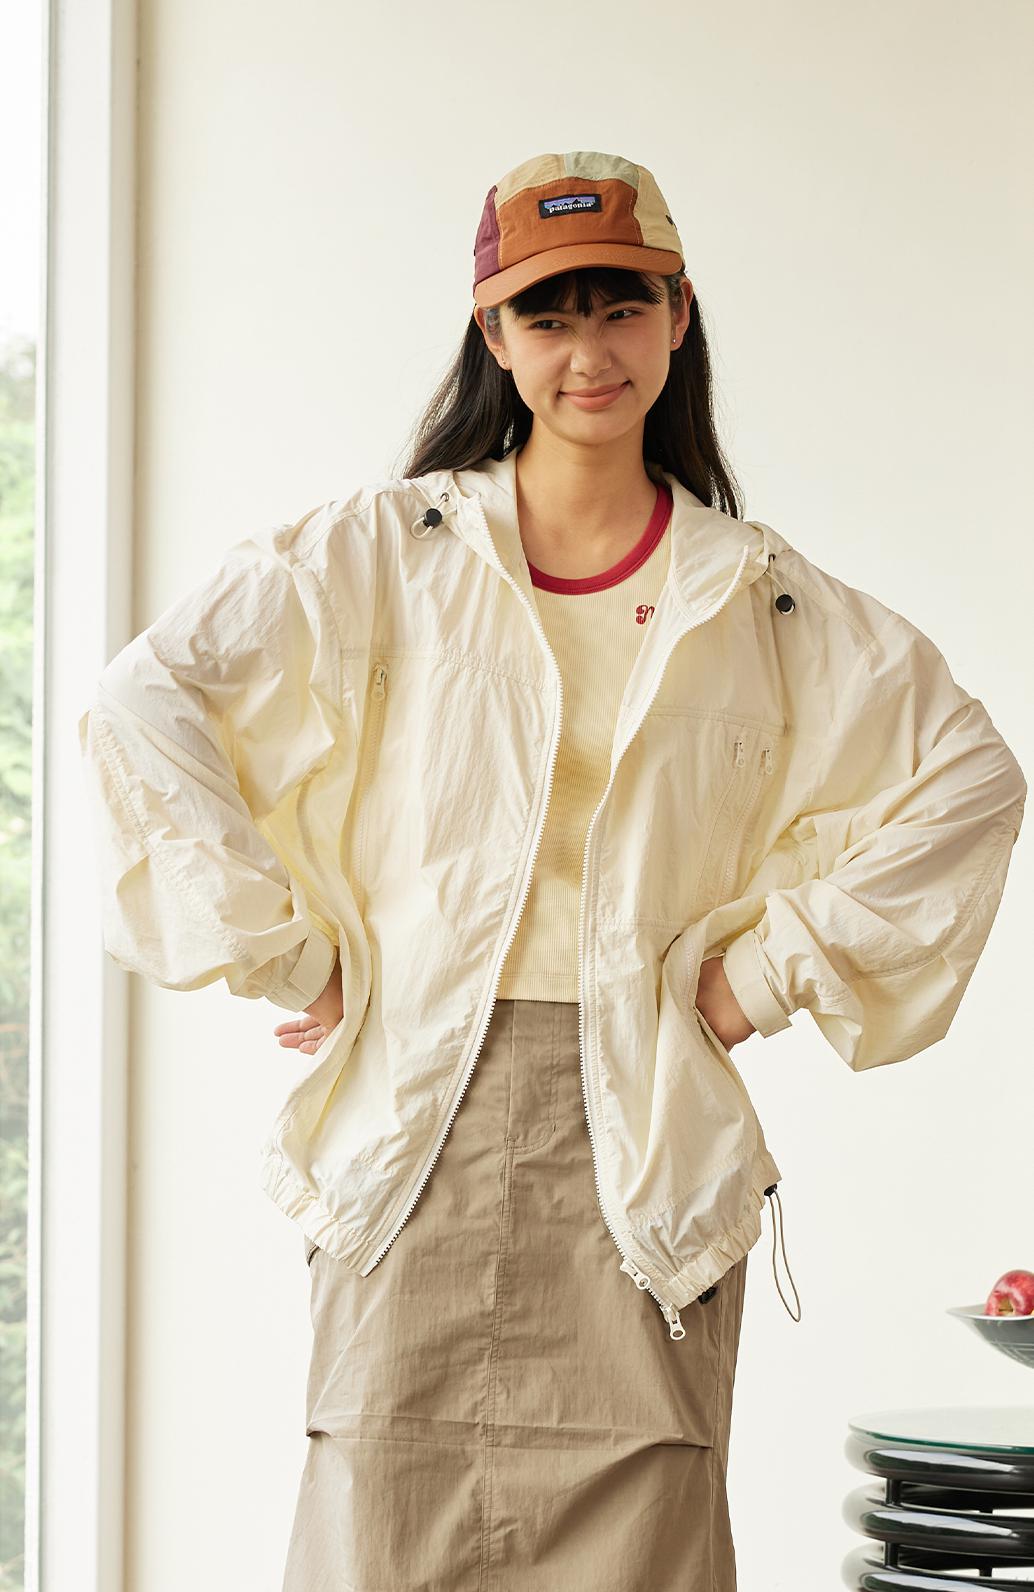 Multi Zip Sunblock Hooded Jacket Korean Street Fashion Jacket By NGO Army Shop Online at OH Vault